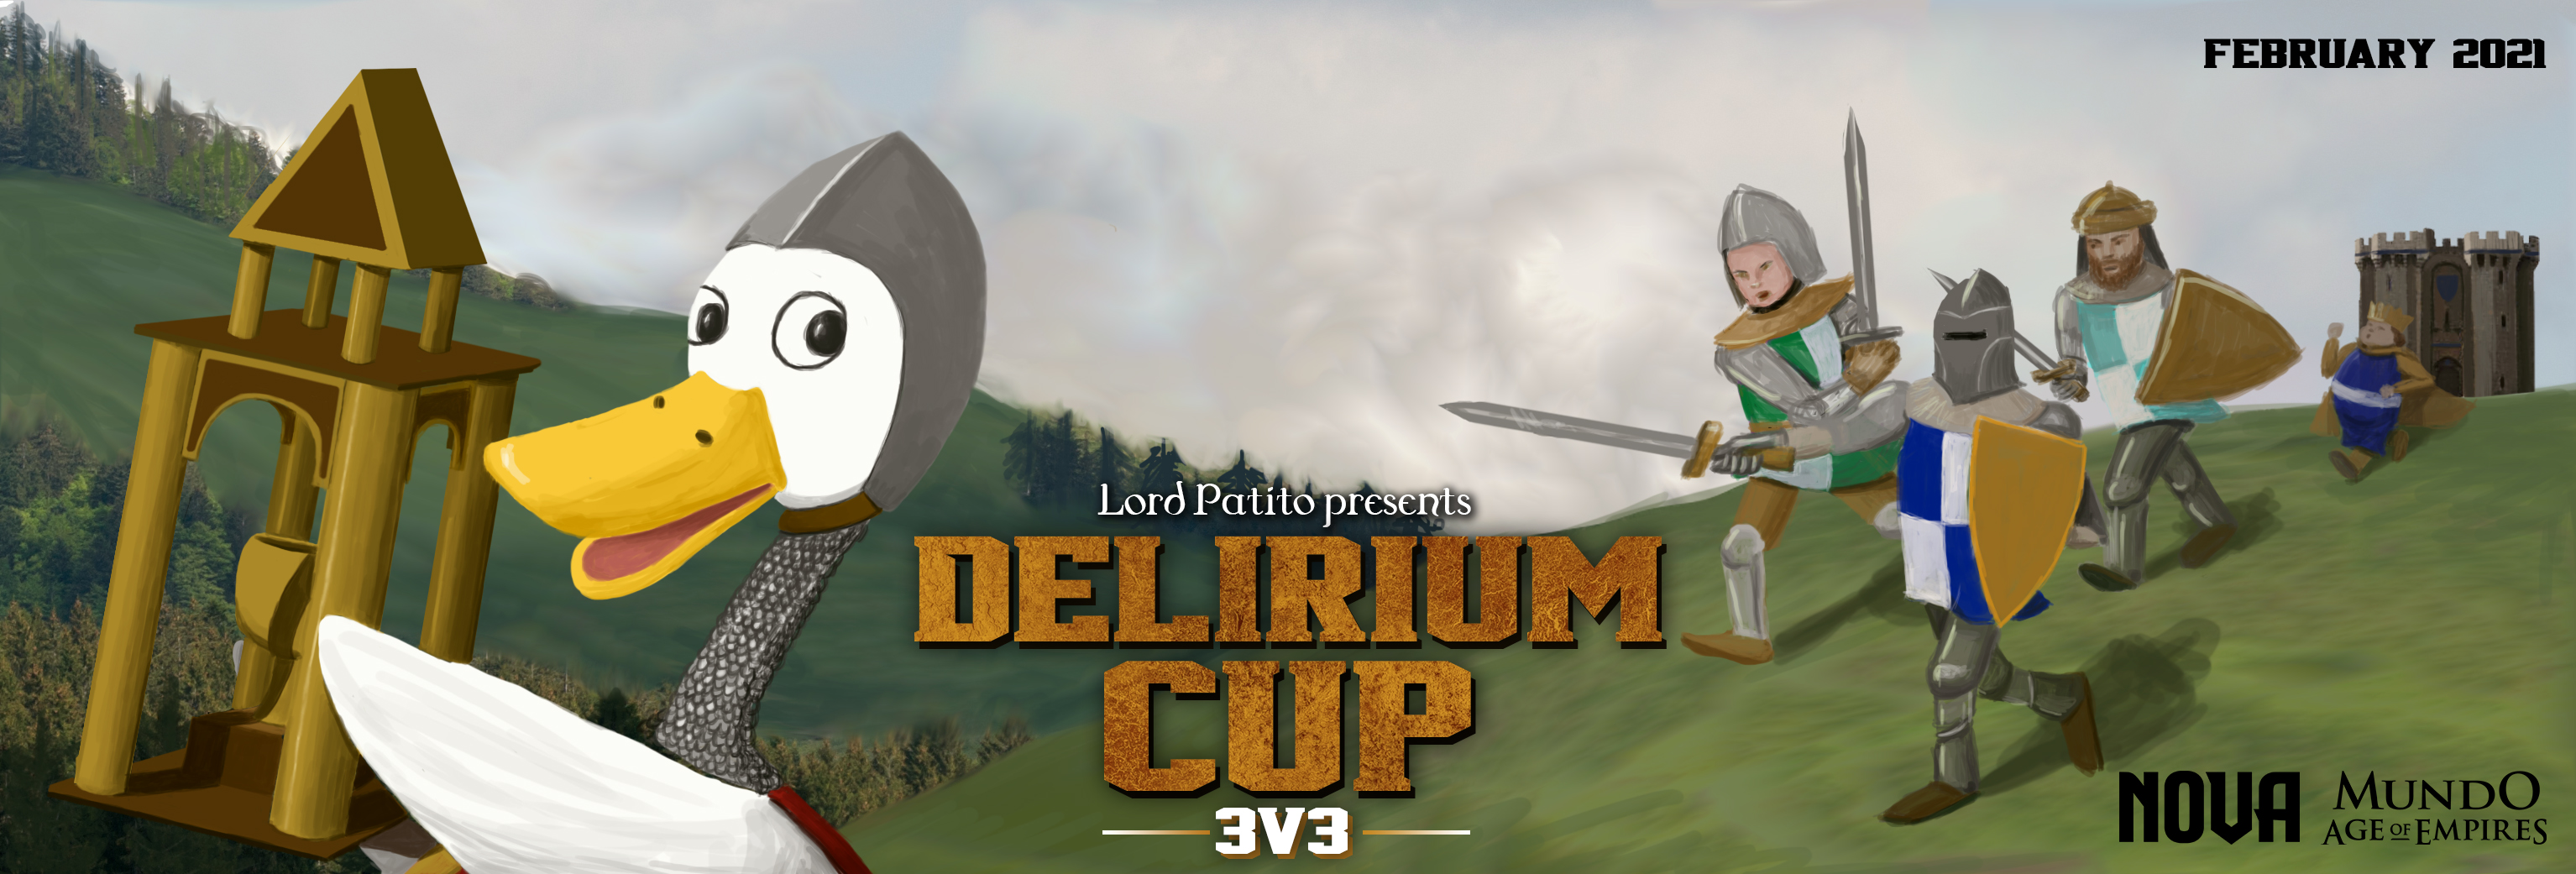 banner-delirium-cup.jpg